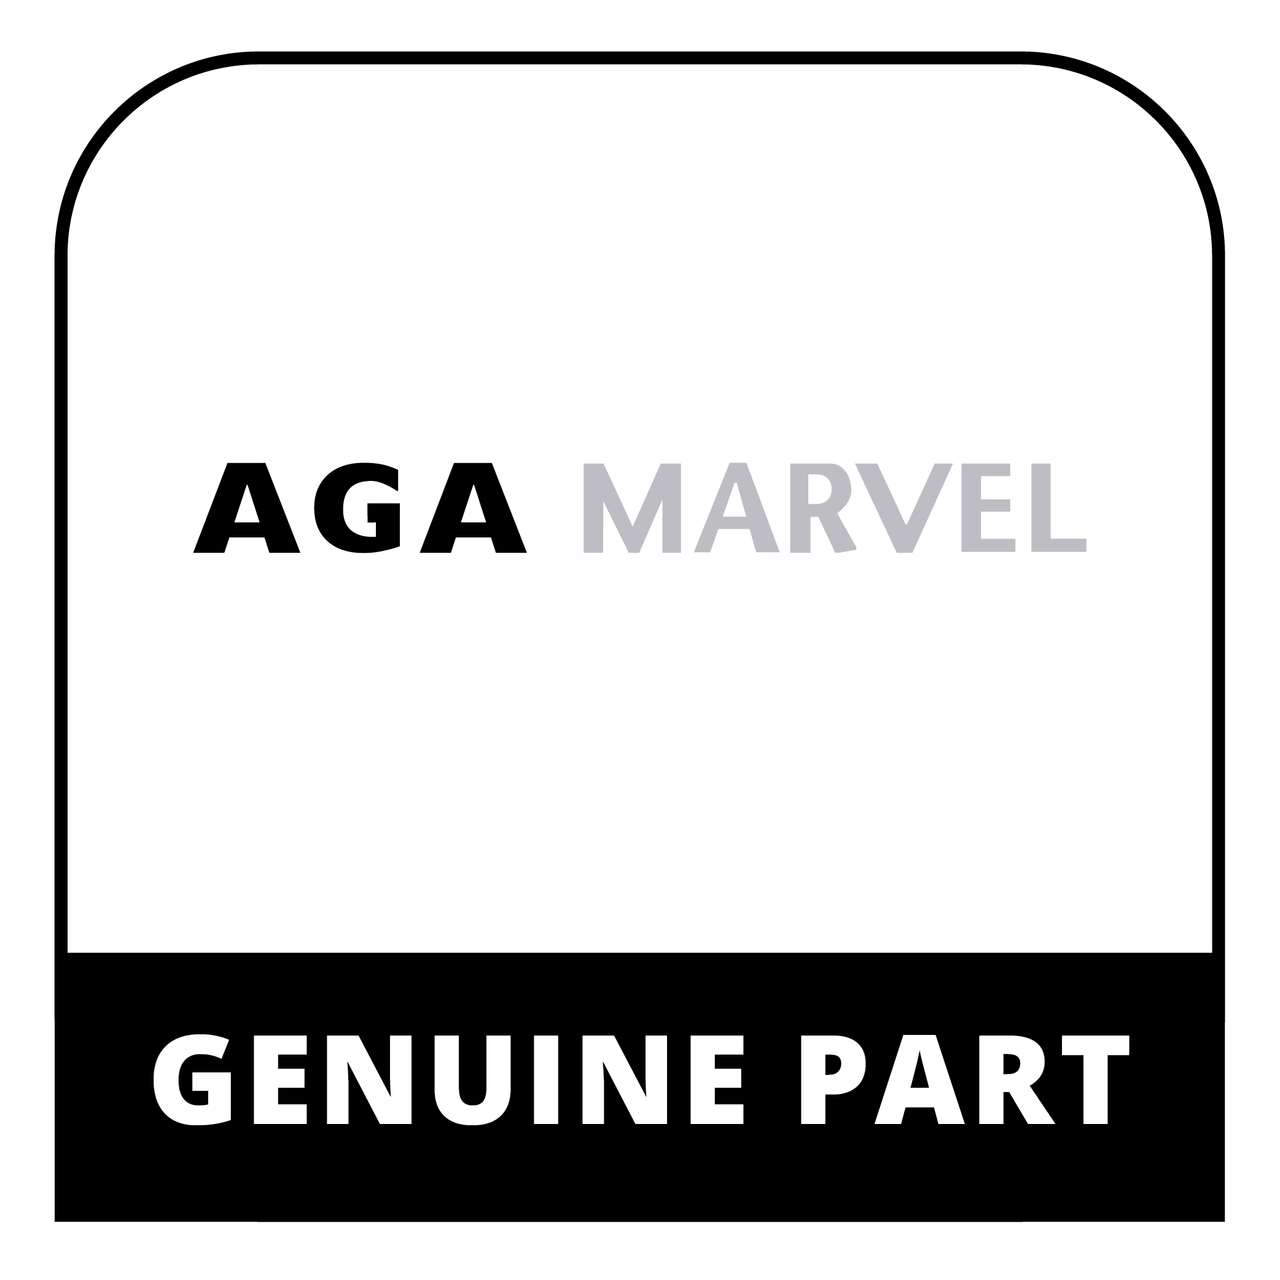 AGA Marvel CCTN520525 - Large Meat Tray Frame Carton - Genuine AGA Marvel Part